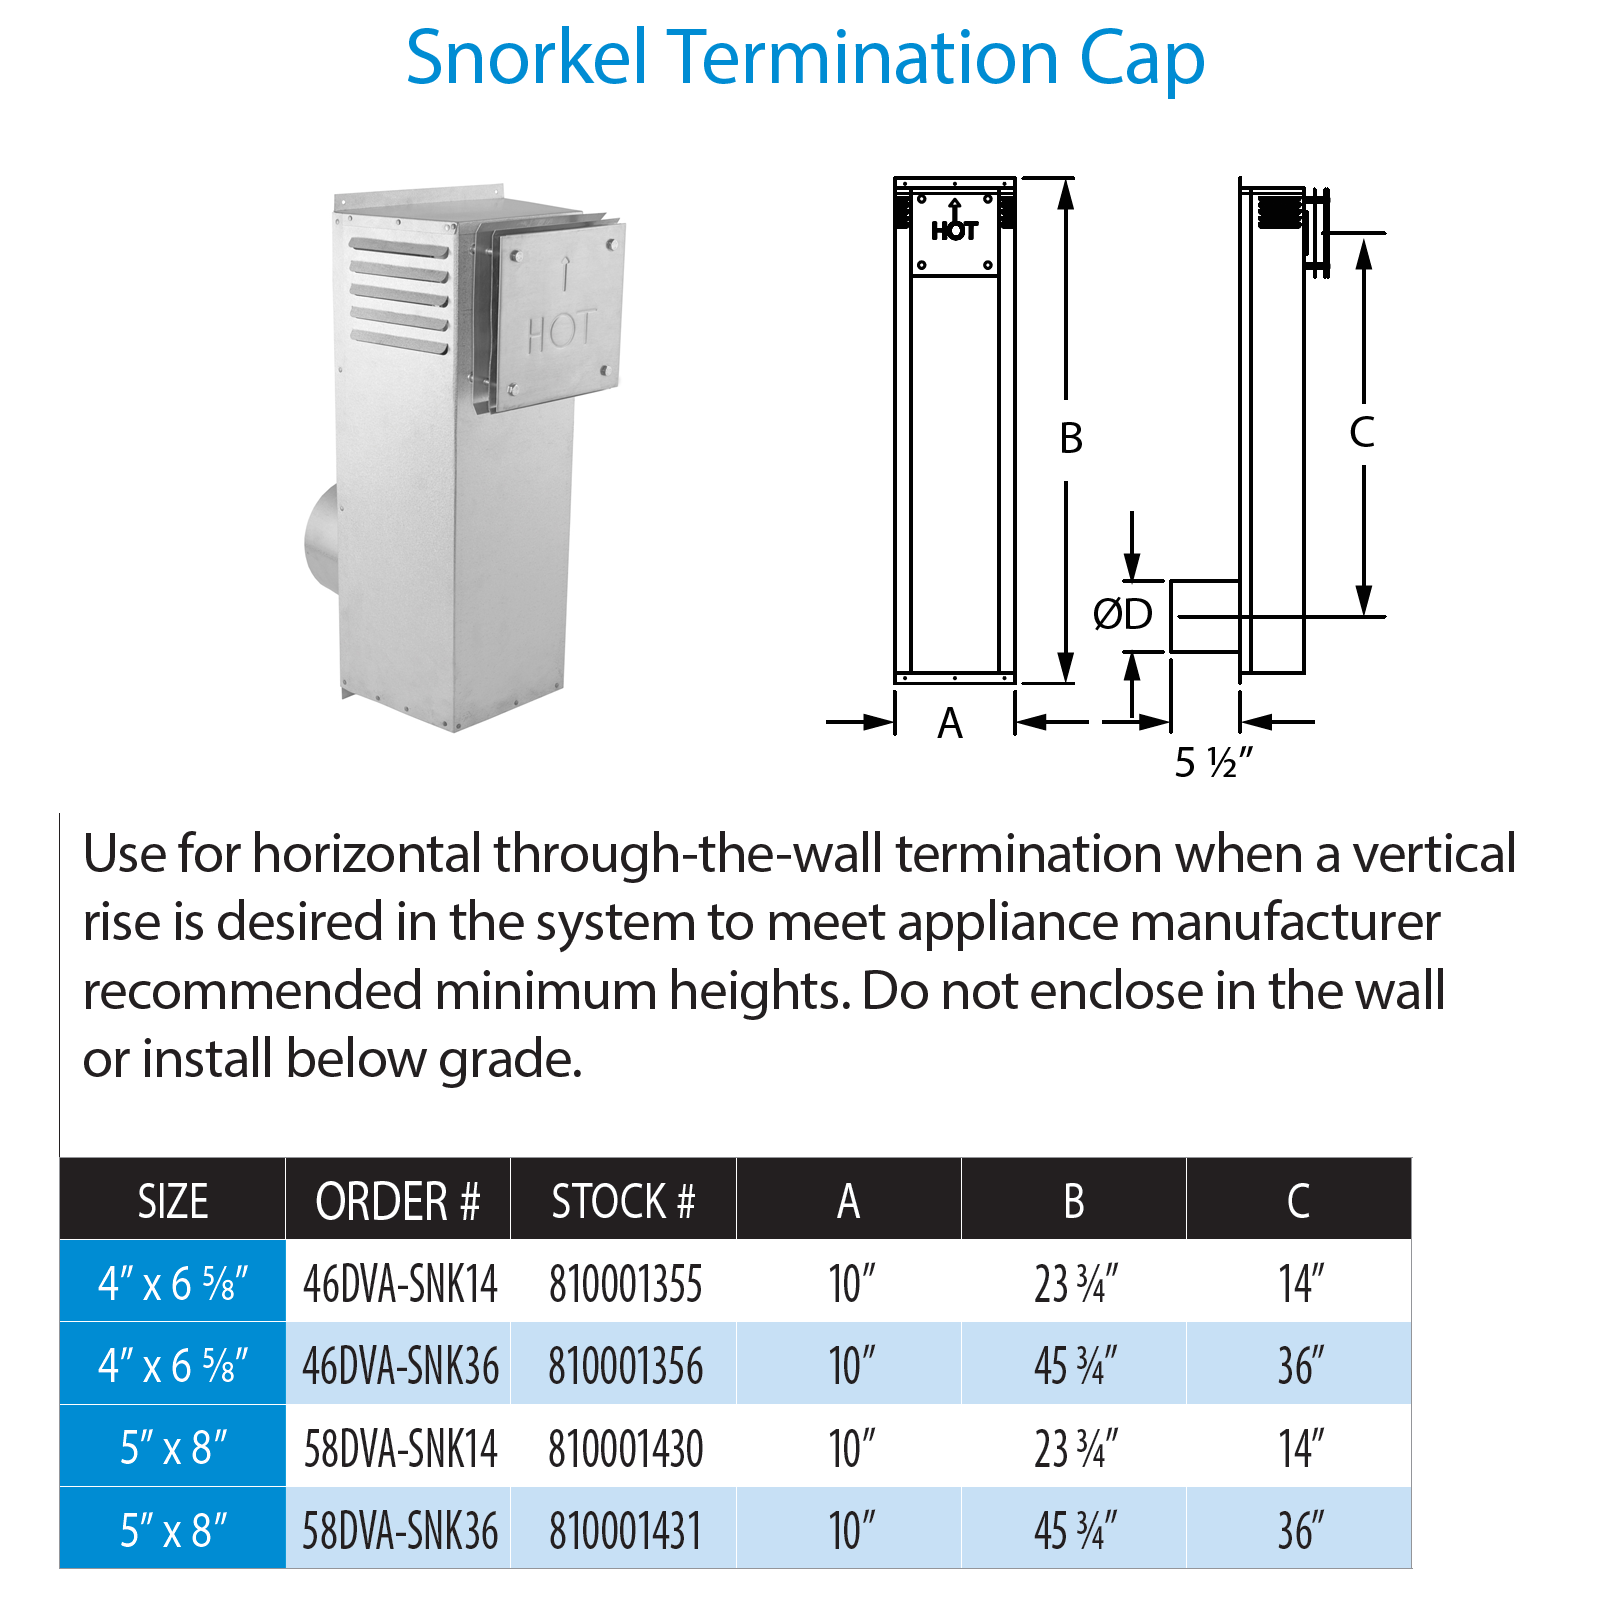 DuraVent DVP 14 Inch Snorkel Termination Cap | 46DVA-SNK14